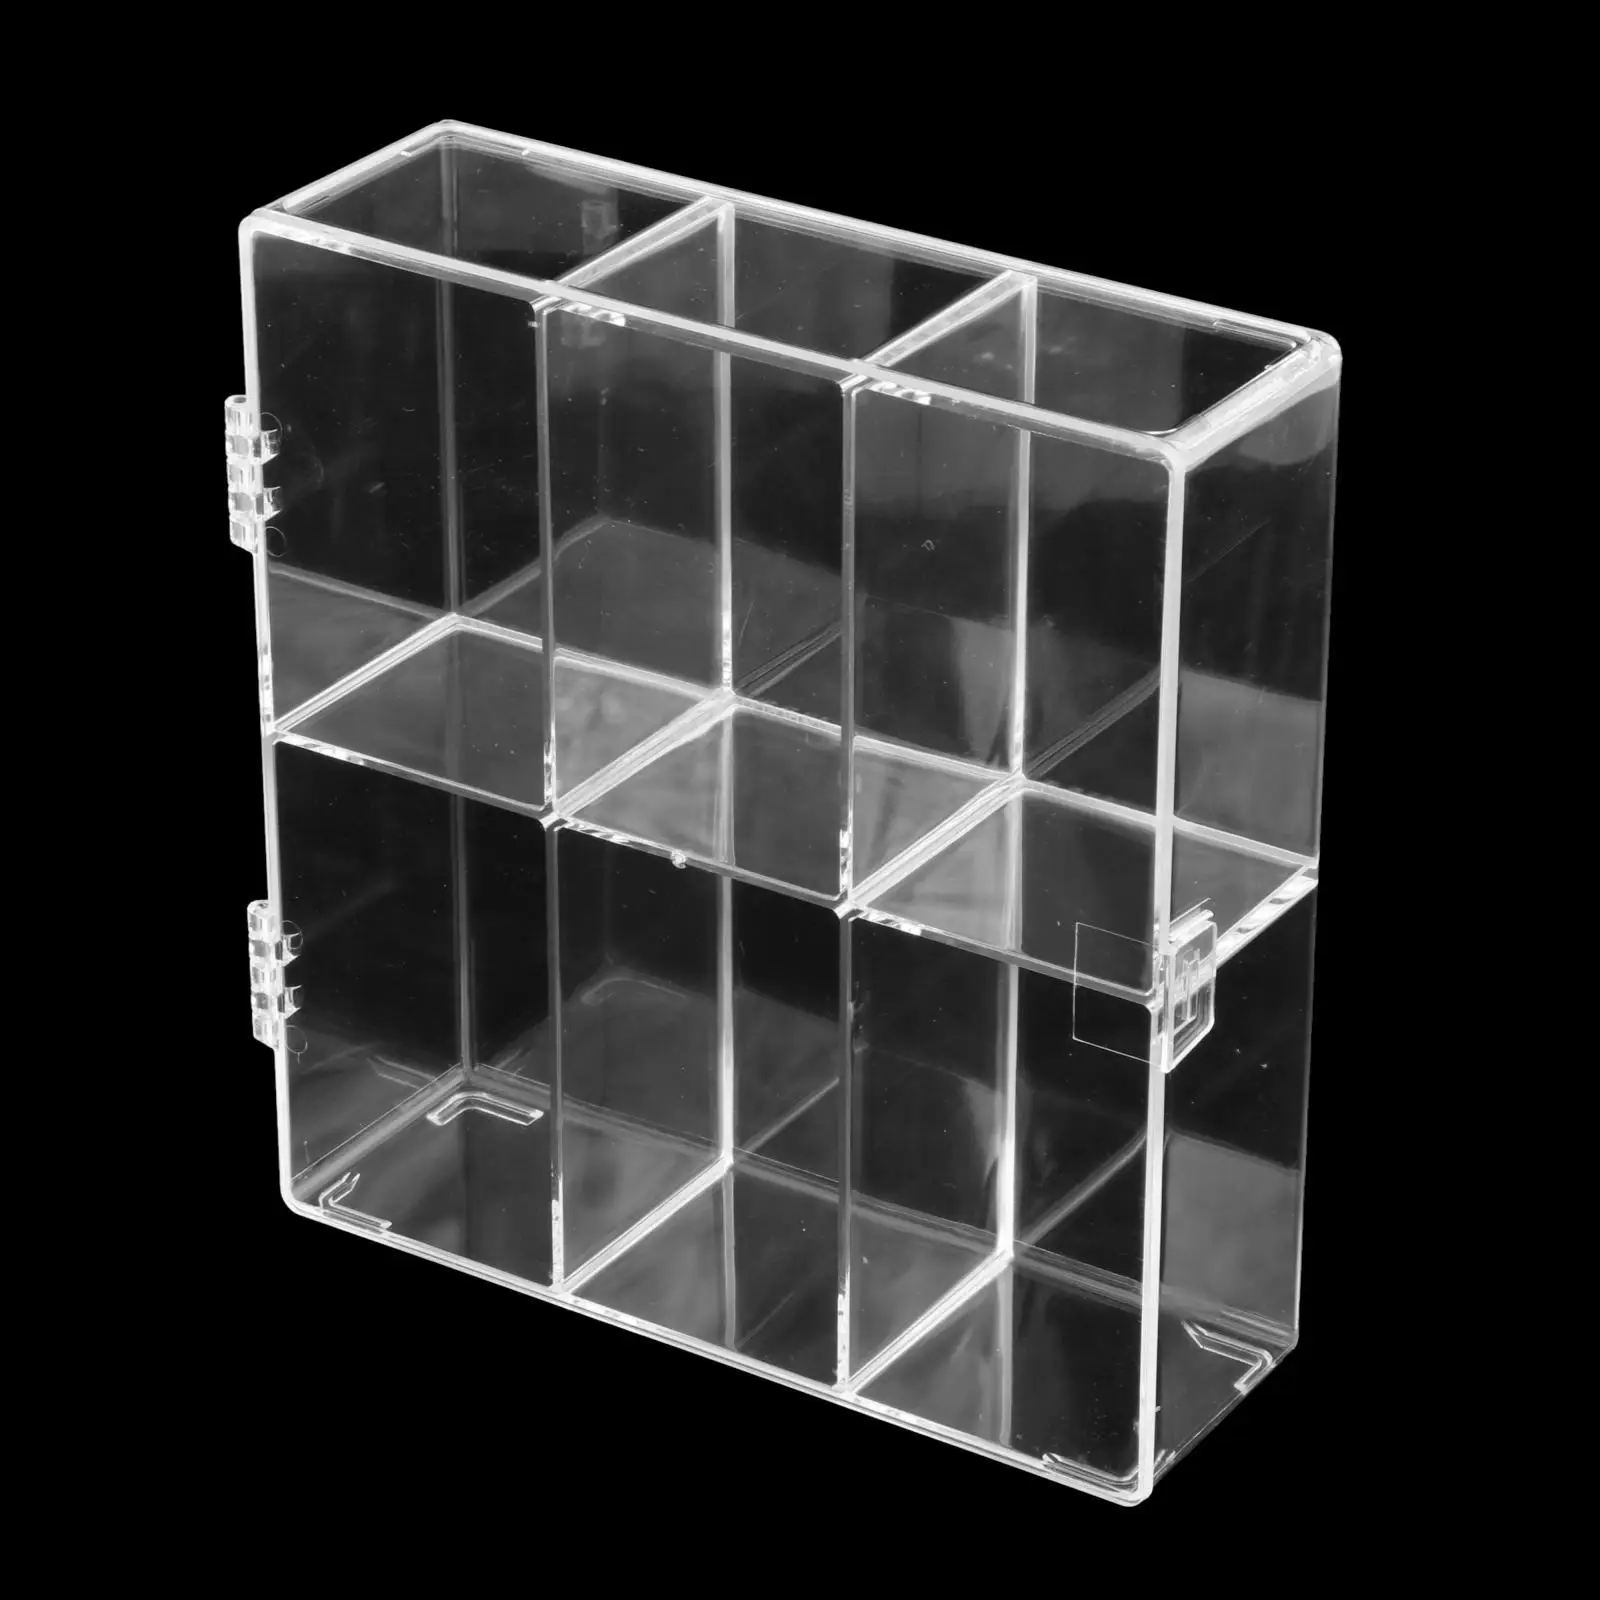 Acrylic Display Rack Stackable 6 Shelves Protection Shelves Storage Box for